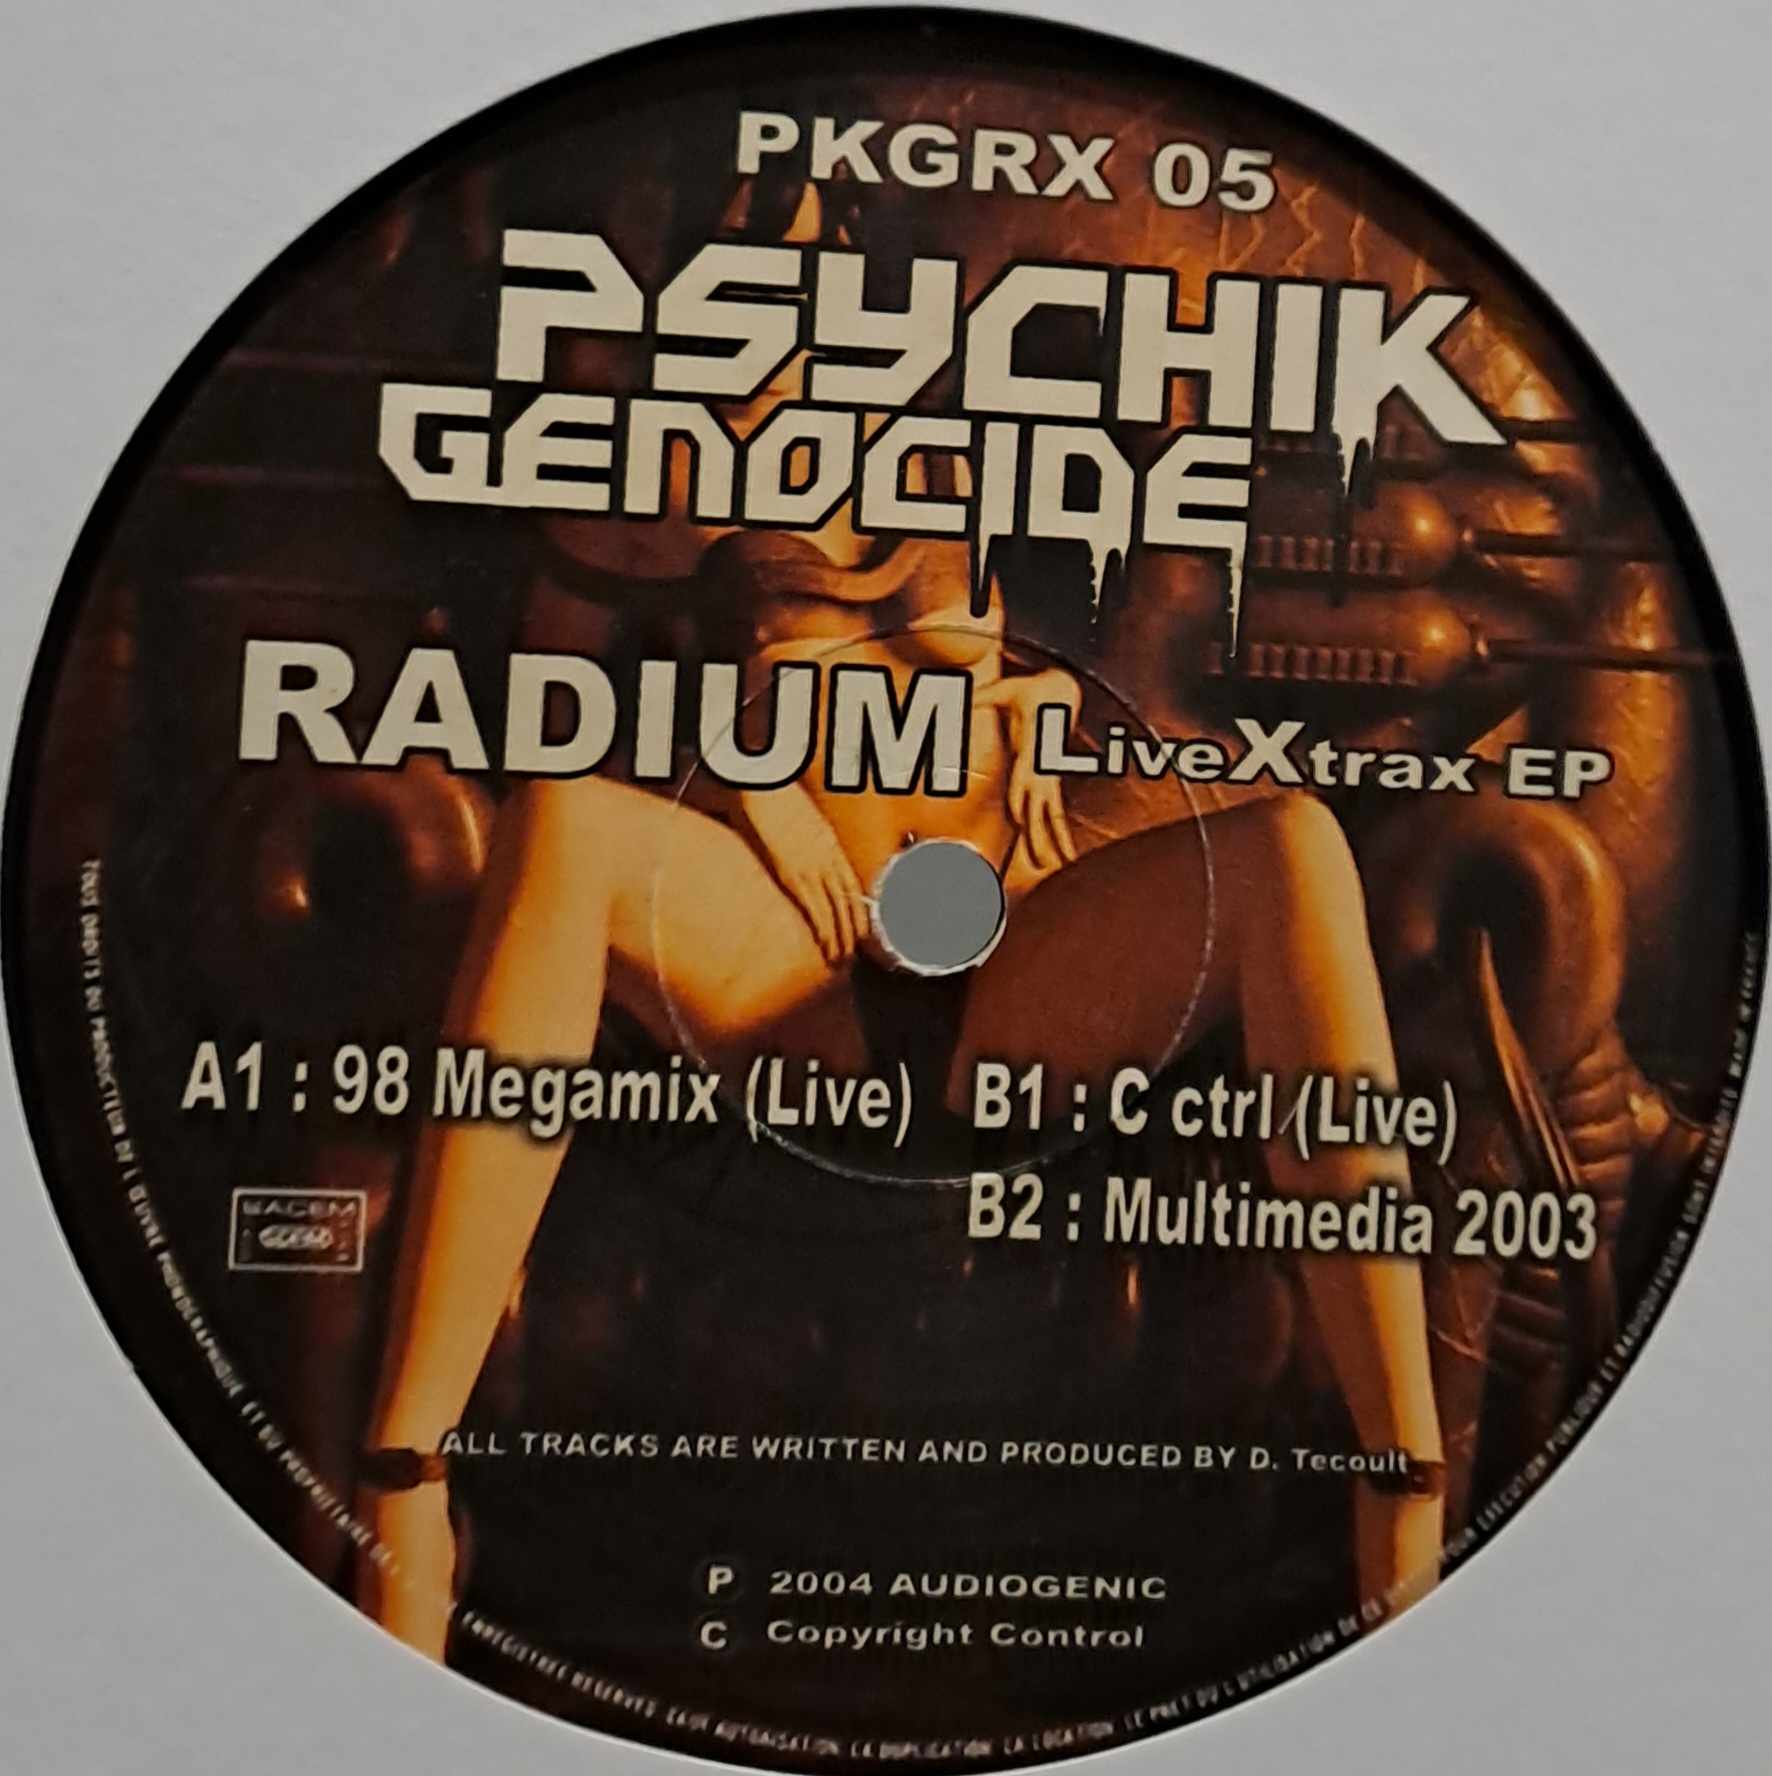 Psychik Genocide RX 05 - vinyle hardcore